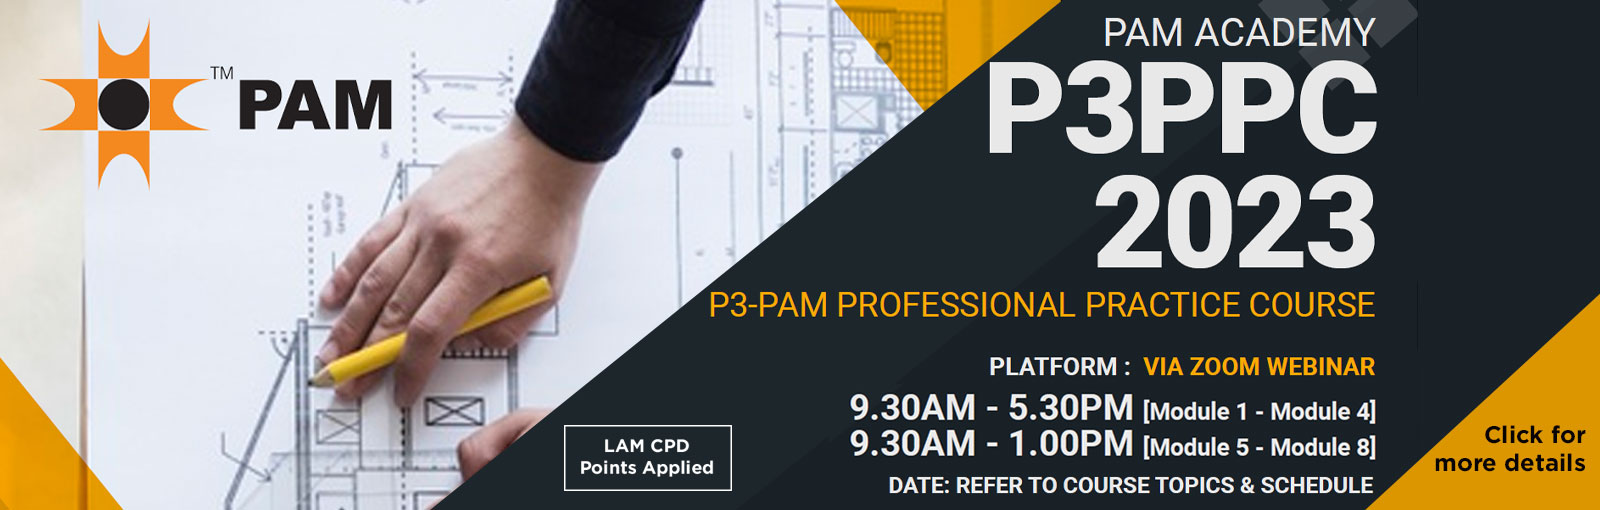 P3-PAM Professional Practice Course 2023